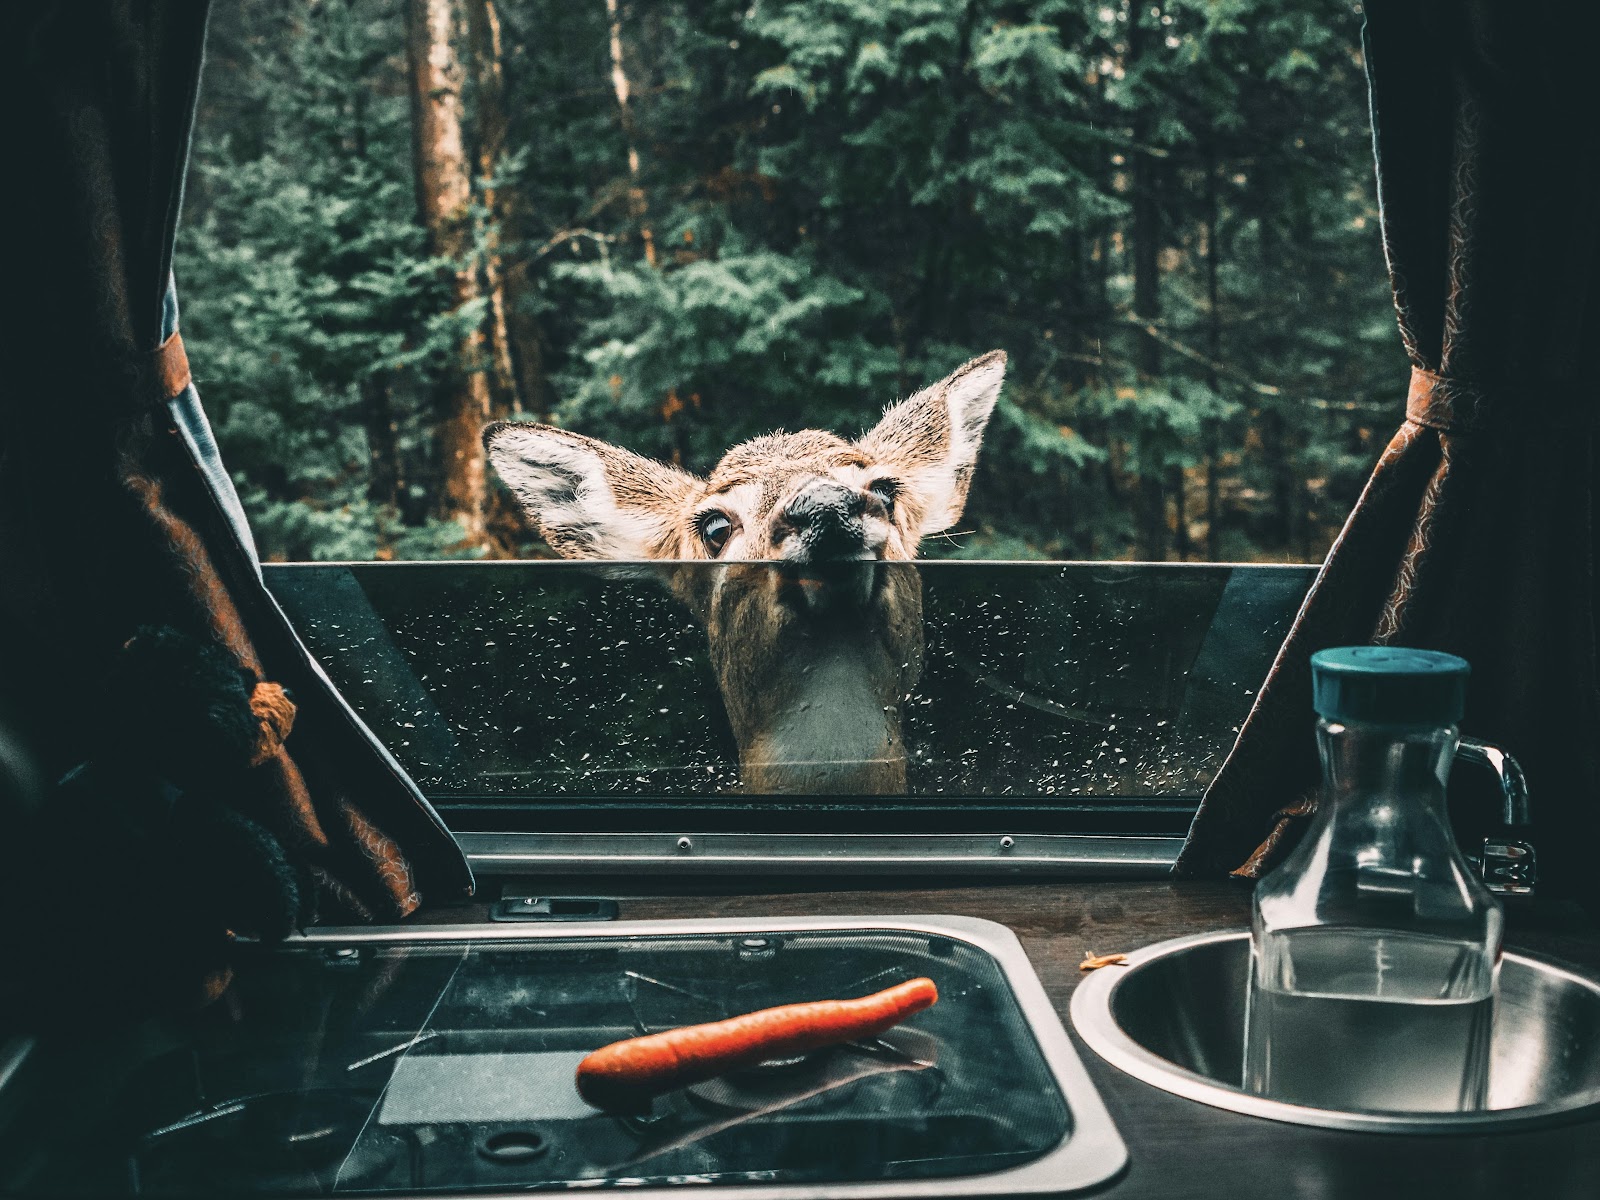 Deer looking in camper van window